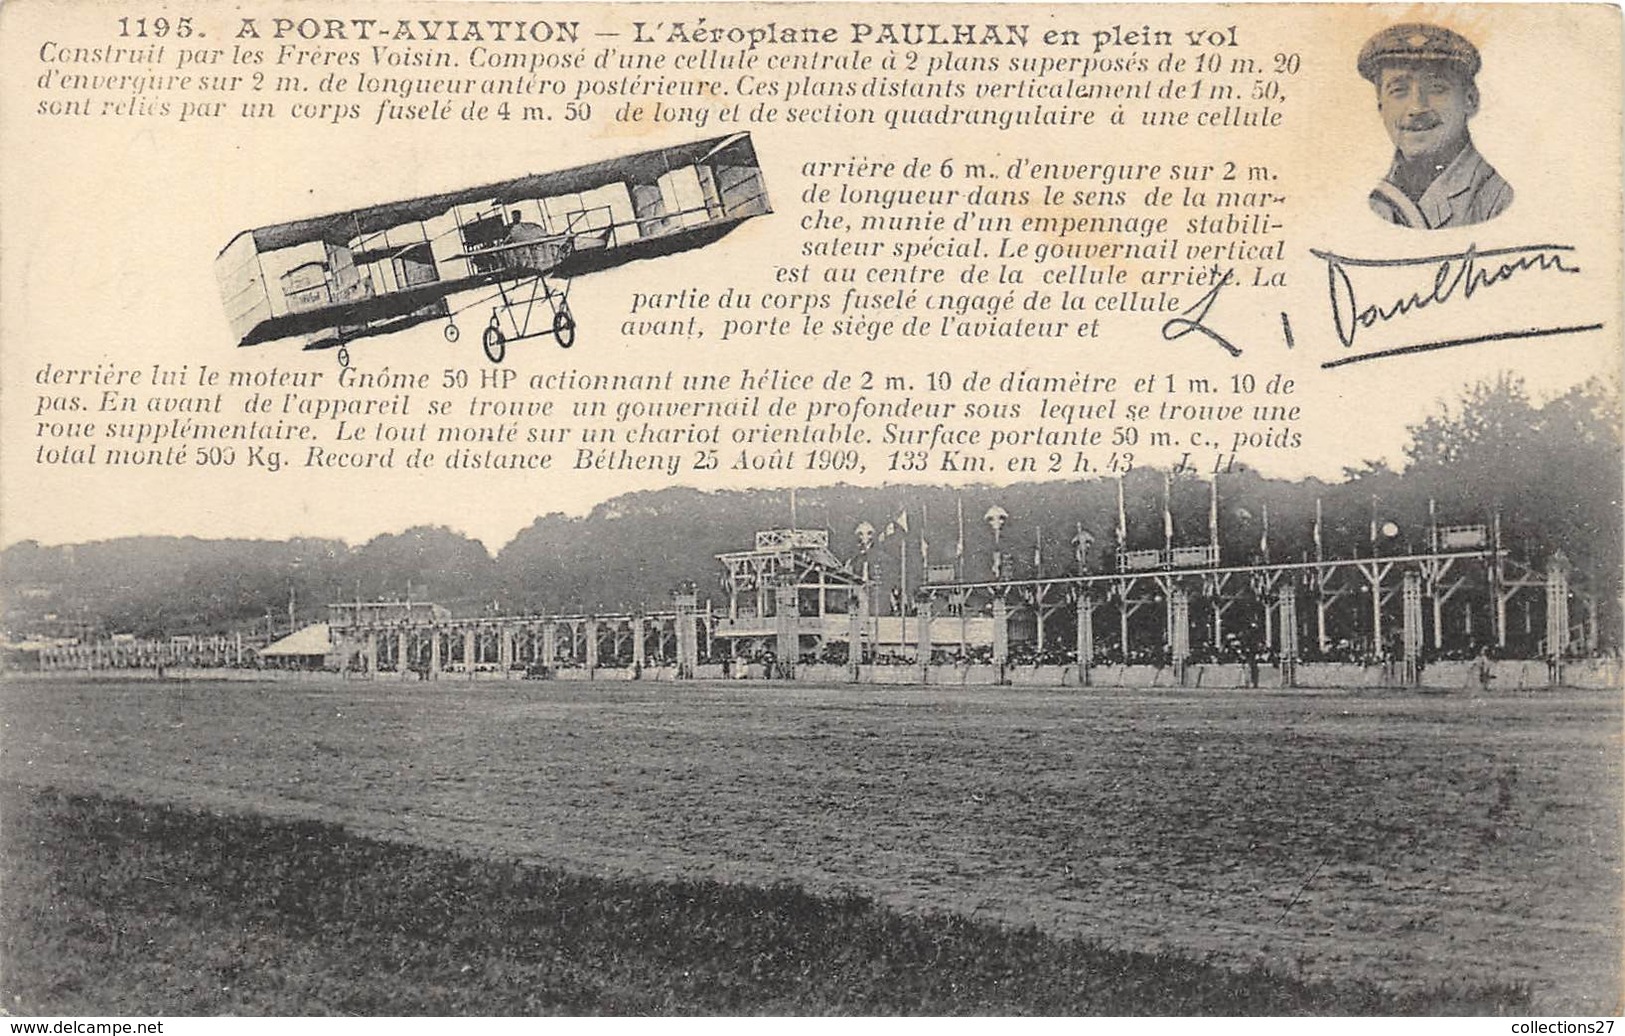 91-PORT-AVIATION-L' AEROPLANE PAULHAN EN PLEIN VOL - Viry-Châtillon